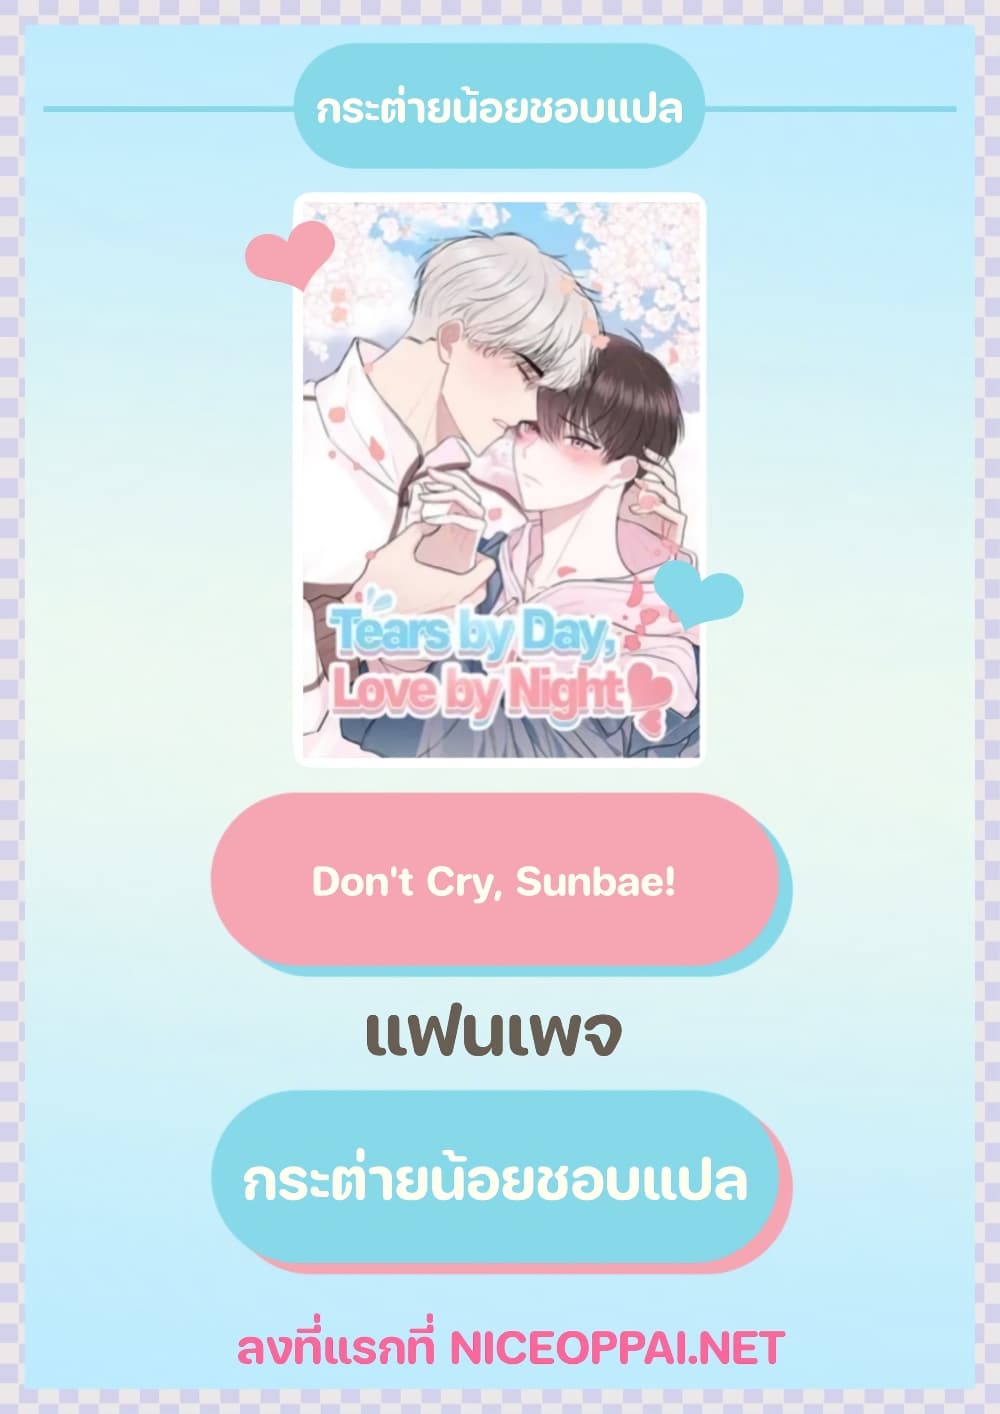 Donโ€t Cry, Sunbae! 22 42